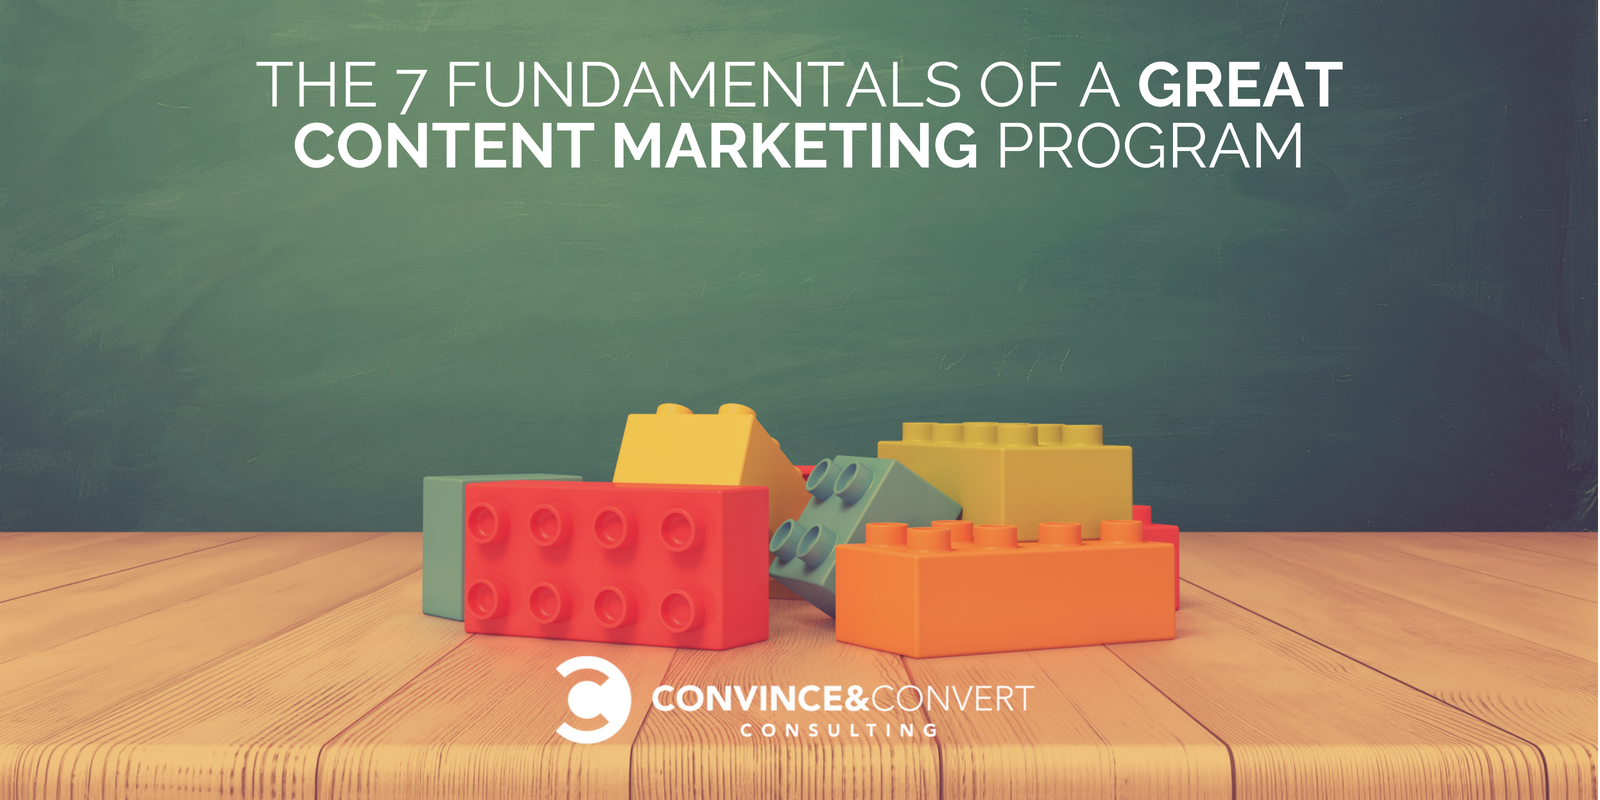 The 7 Fundamentals of a Great Content Marketing Program